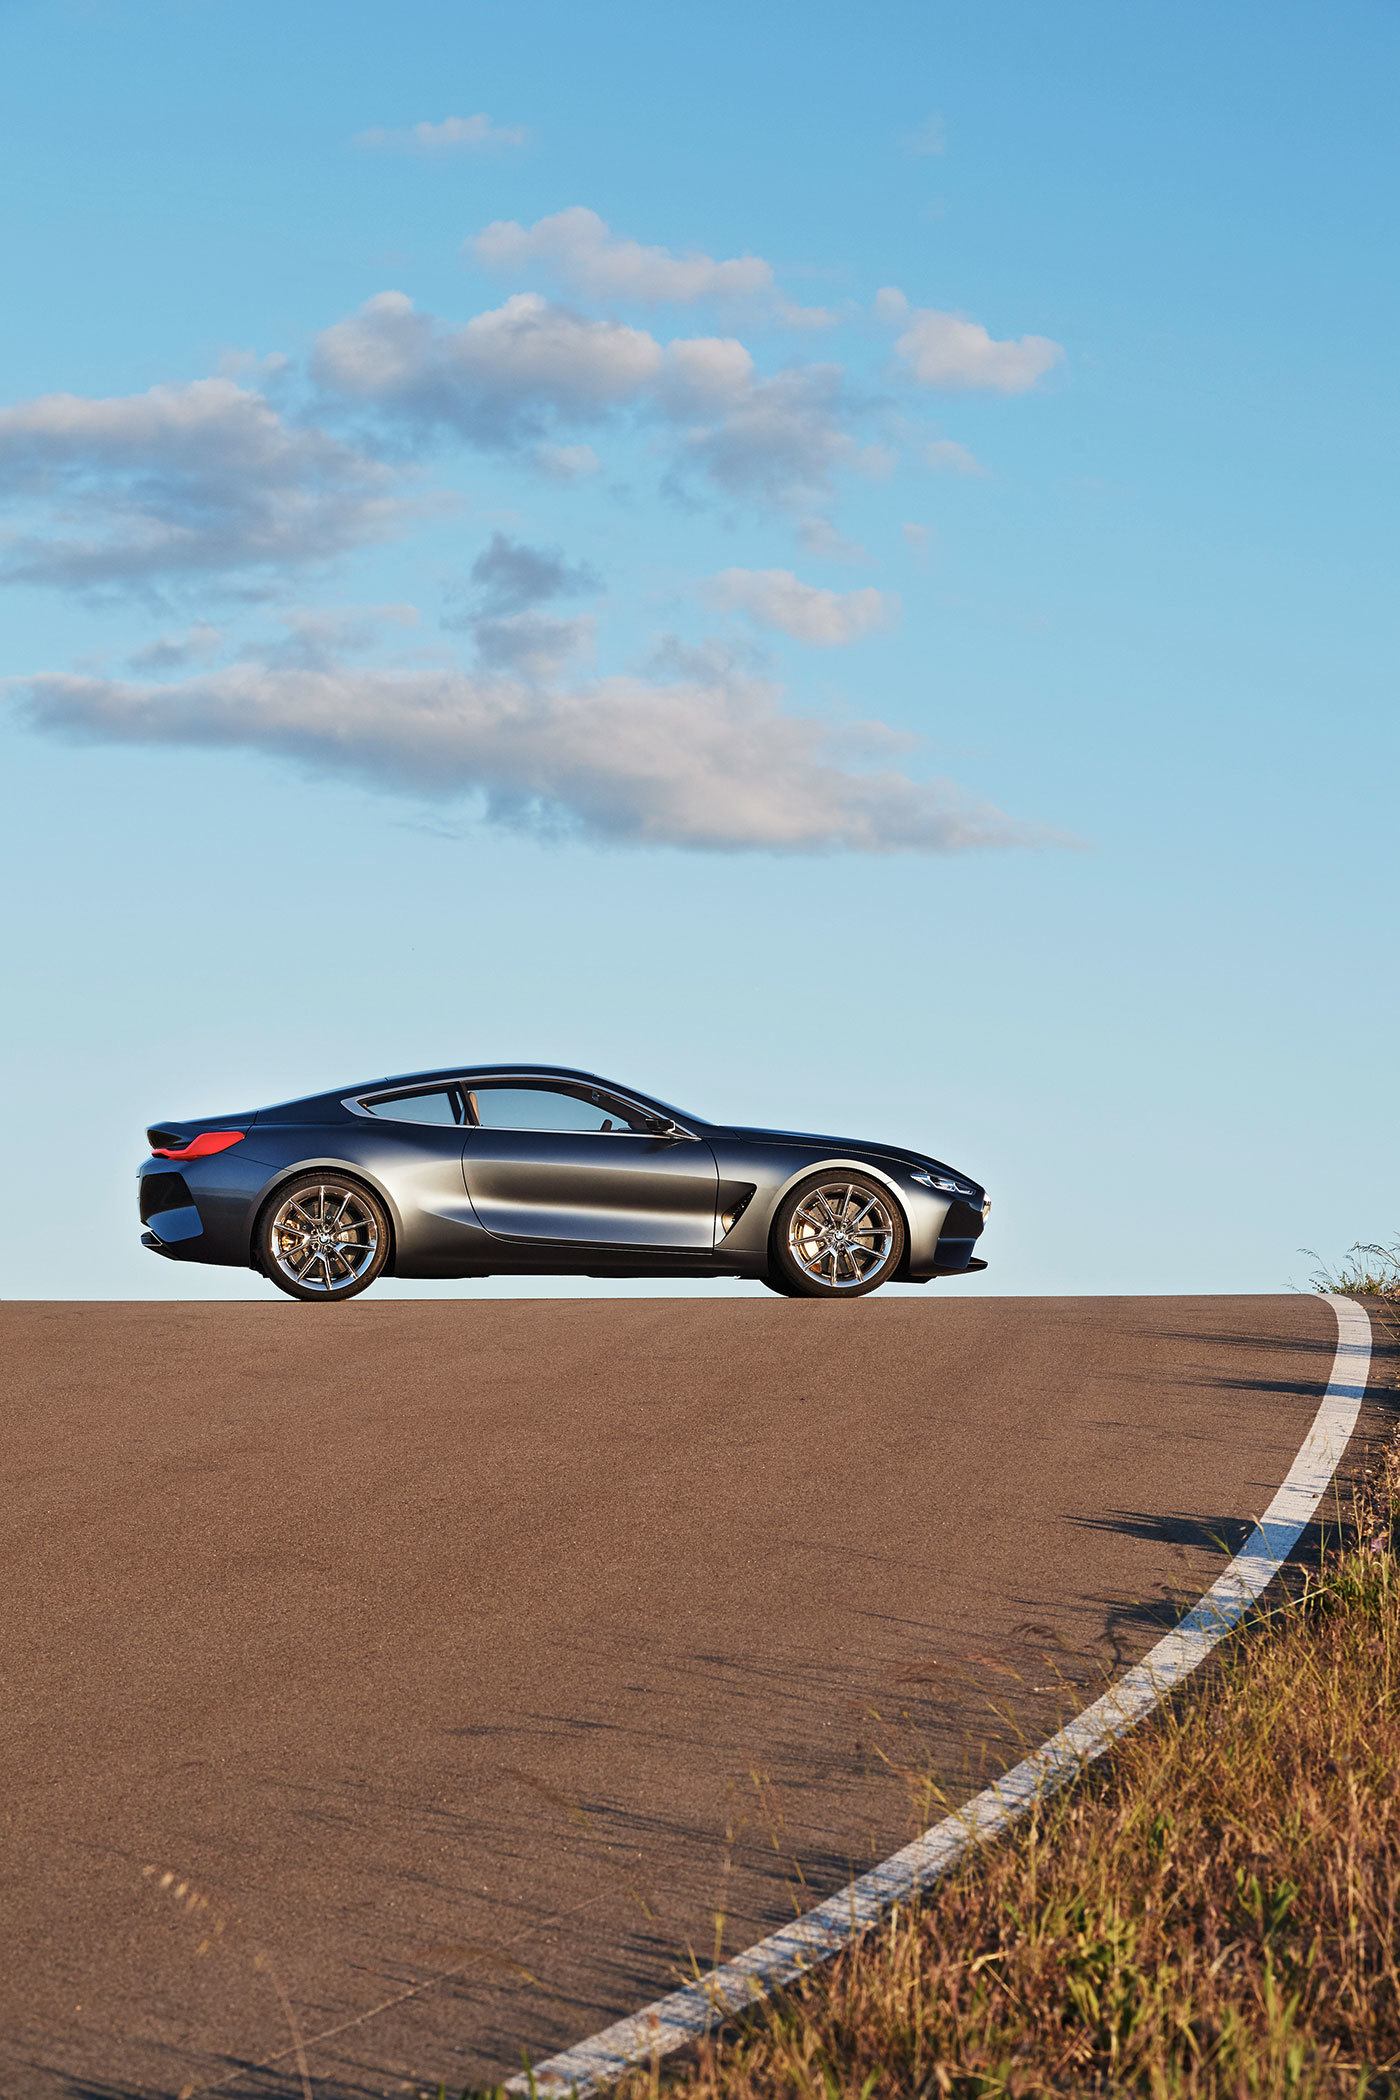 imagen 3 de BMW Serie 8 Concept, regreso al futuro. Ese deportivo coupé que querríamos todos.